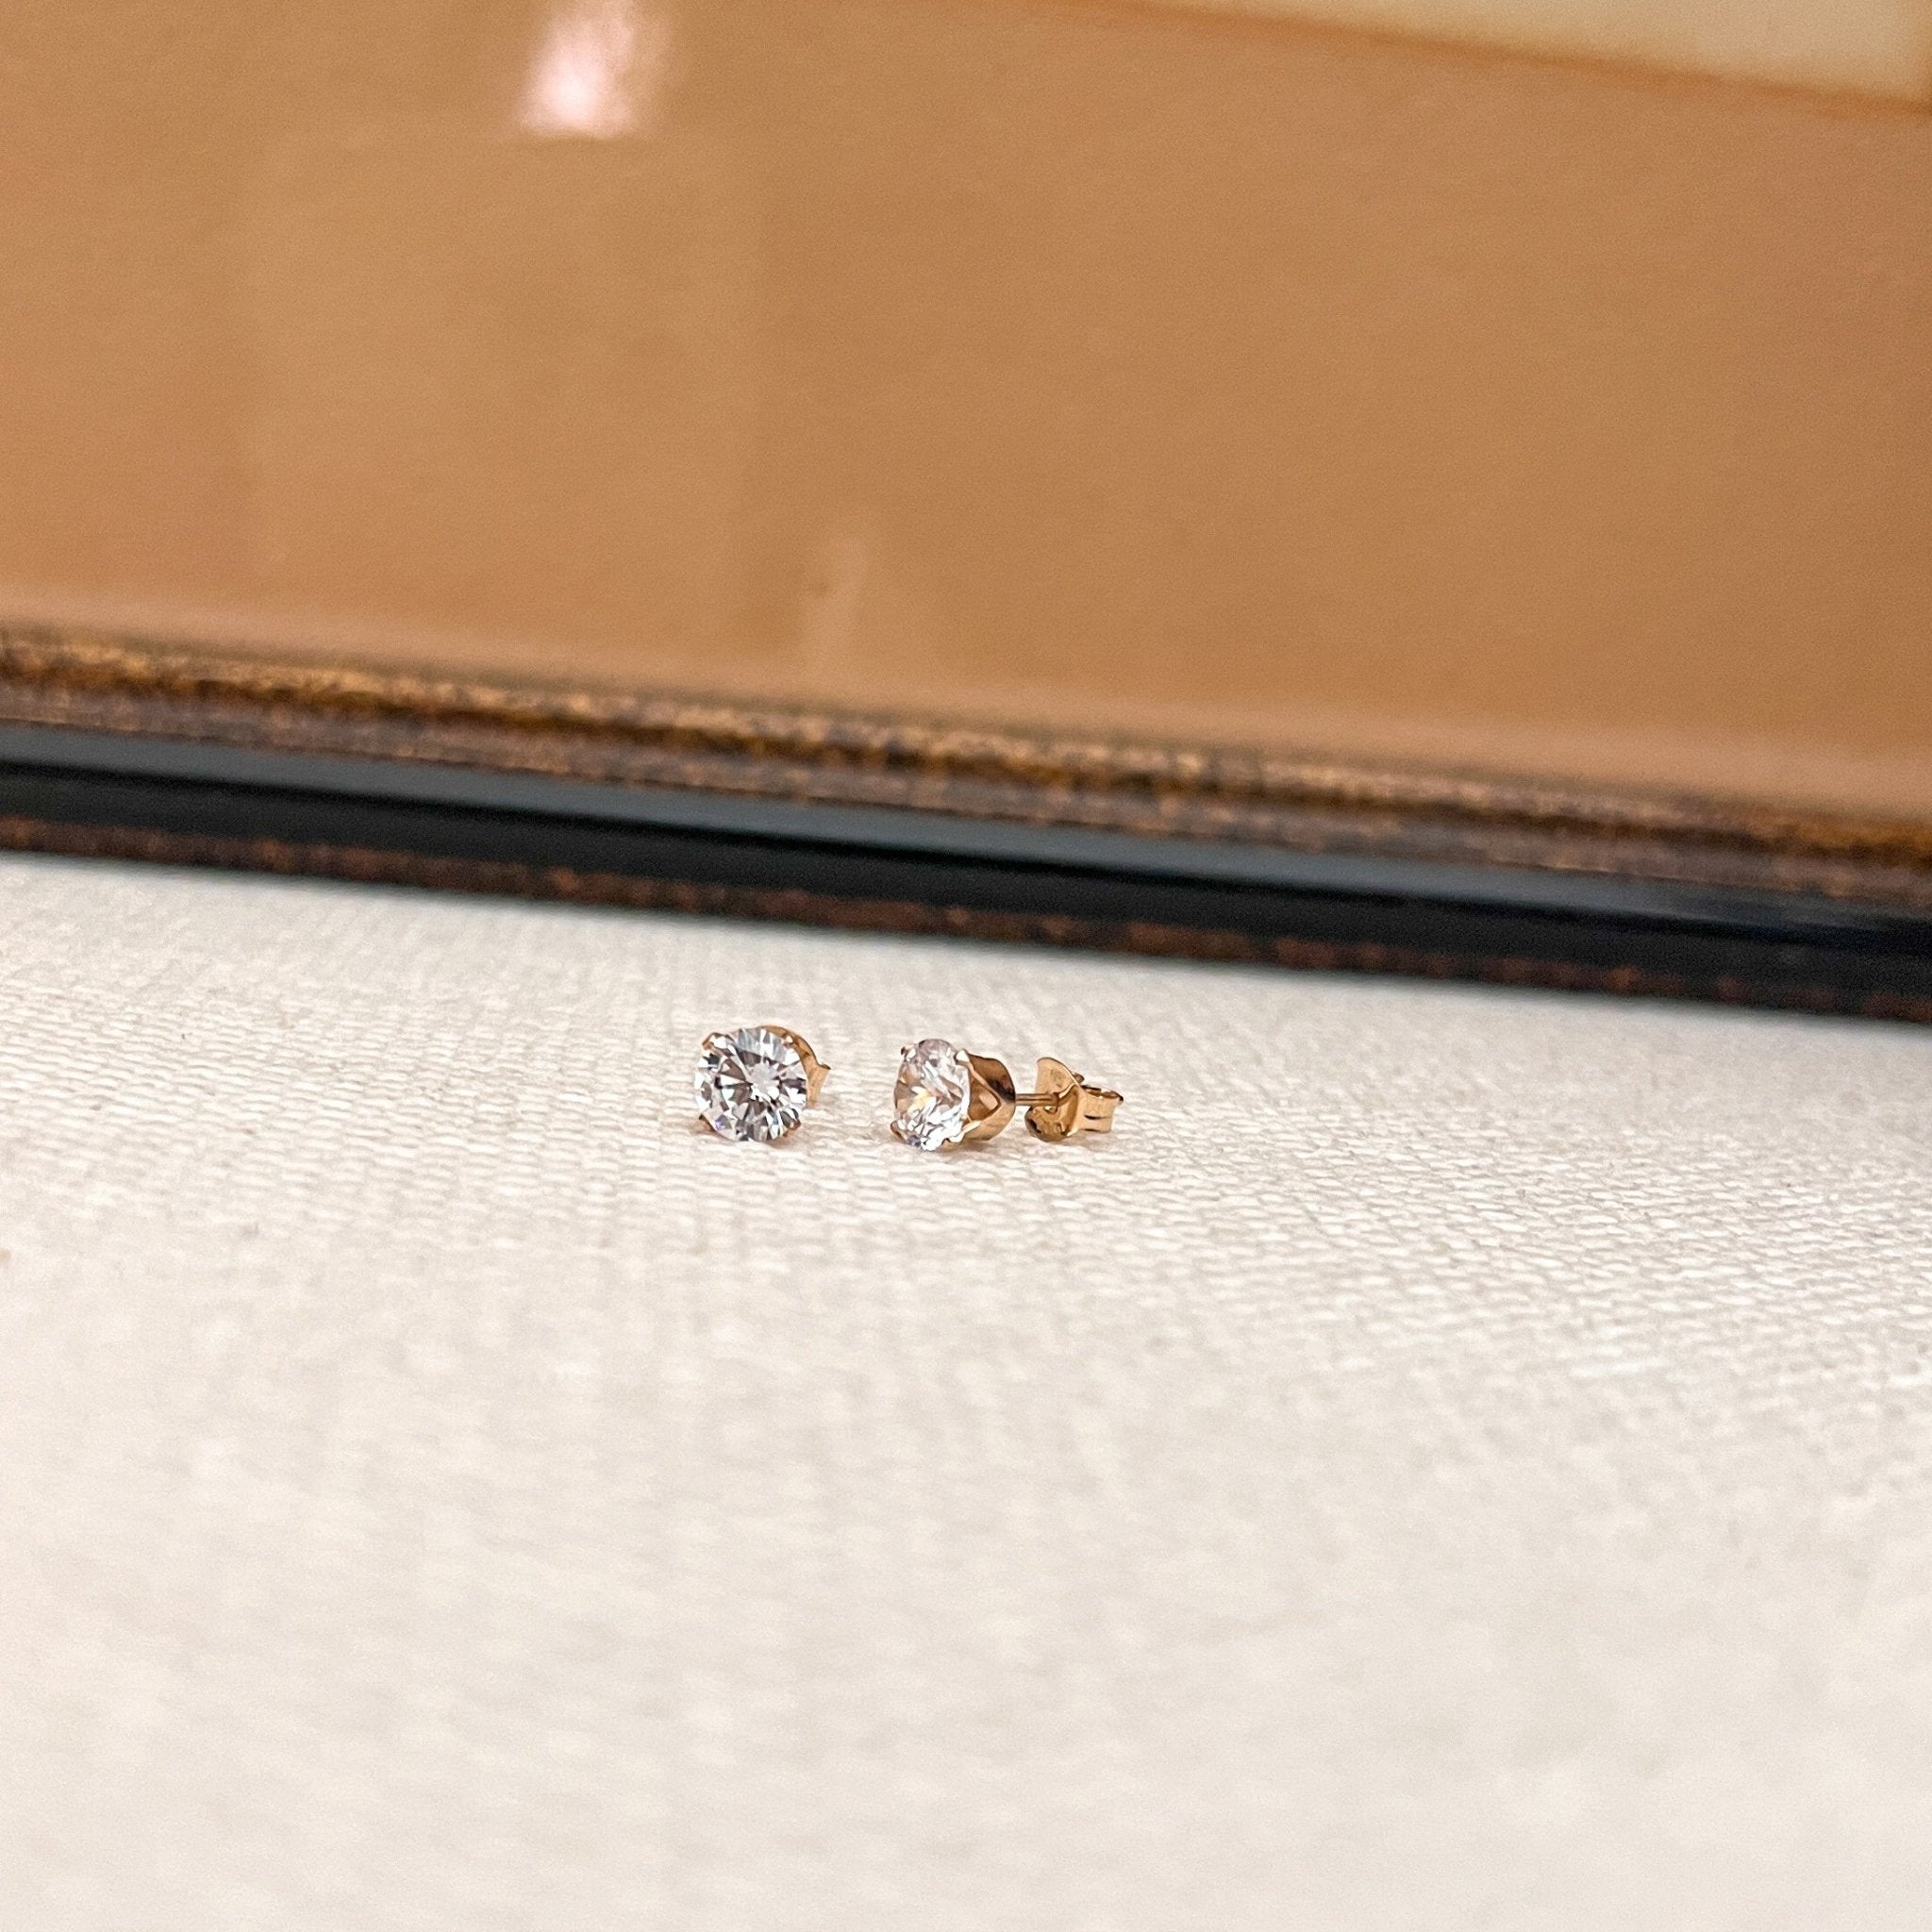 6mm (.85 karat) CZ Diamond Studs - Gold Filled or Silver - Sela+Sage - Stud/Post Earrings